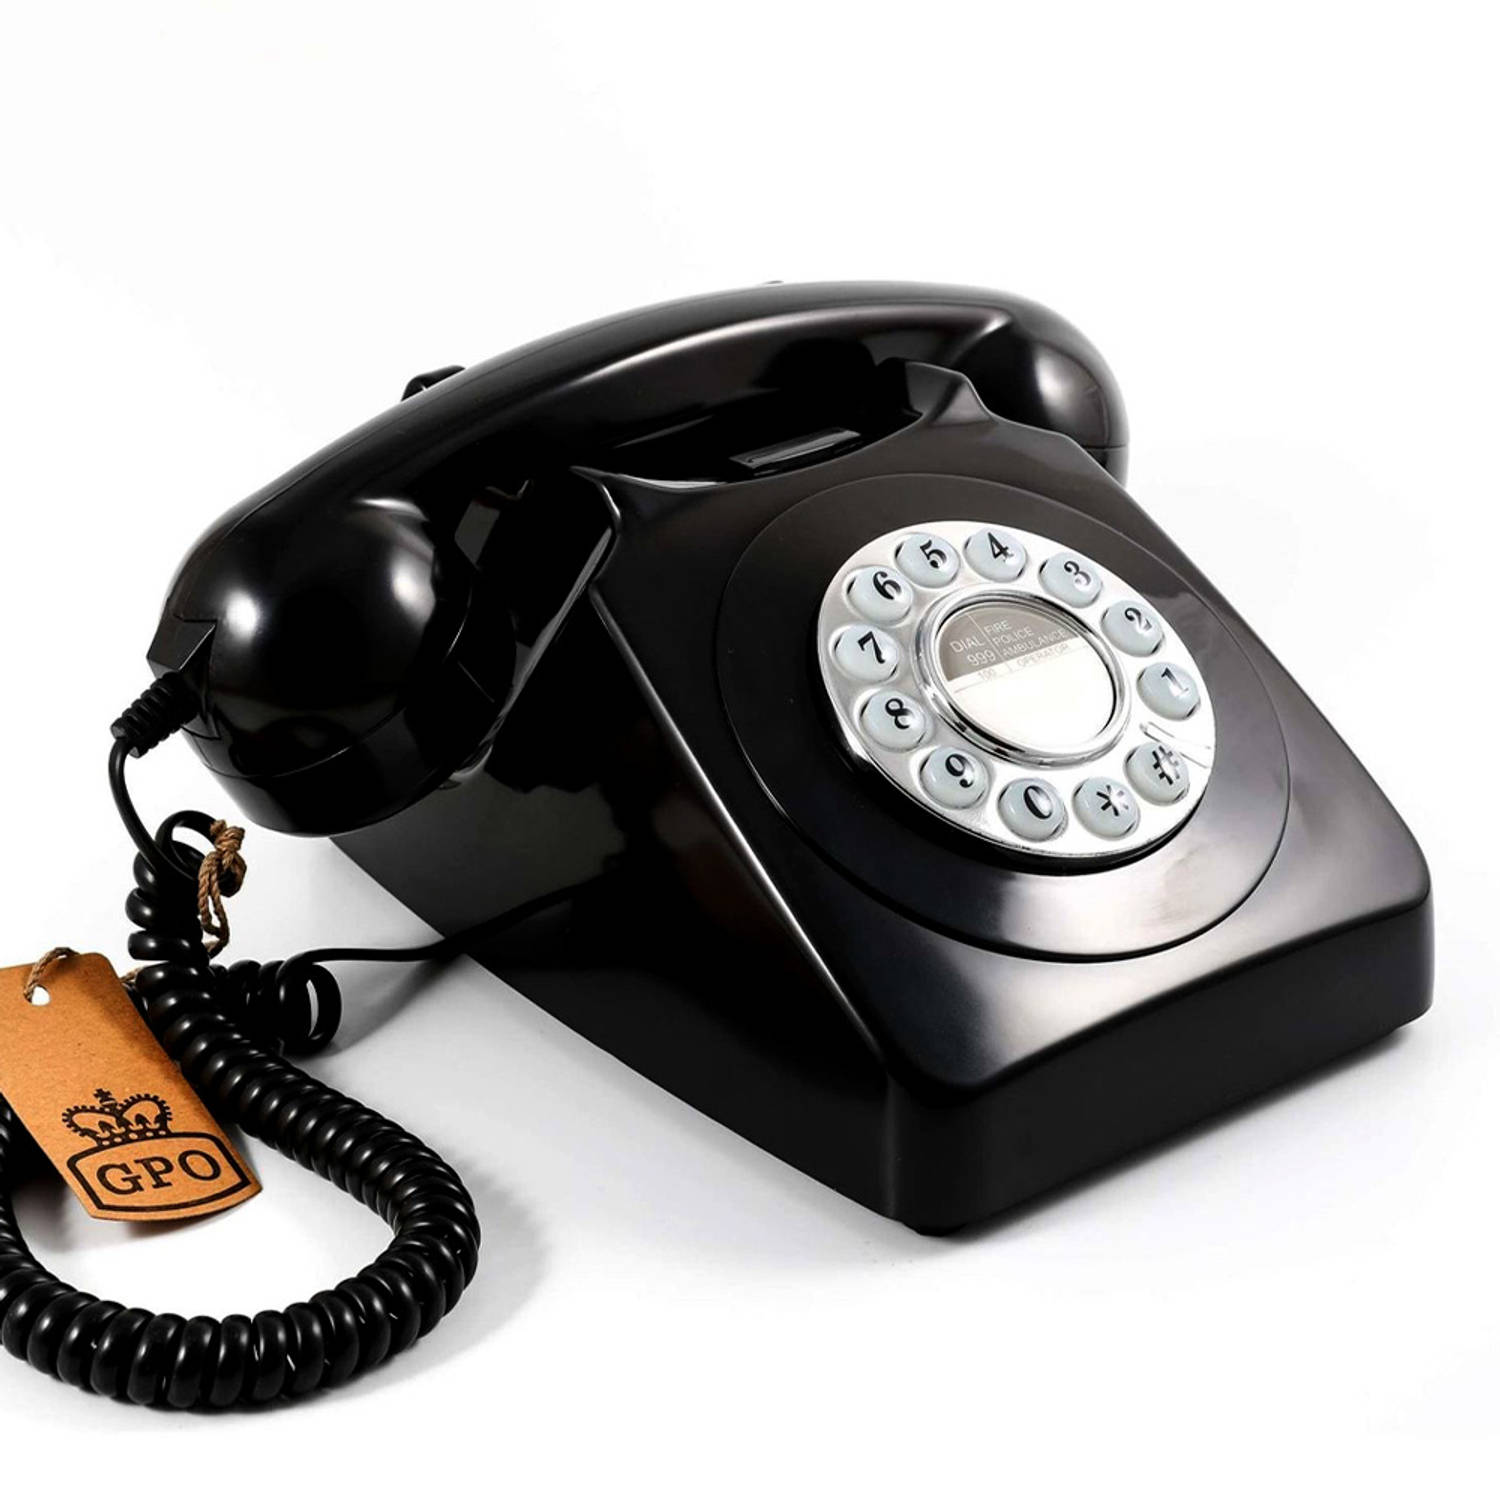 Bondgenoot saai mini GPO 746 Druktoets Retro Telefoon Zwart | Blokker